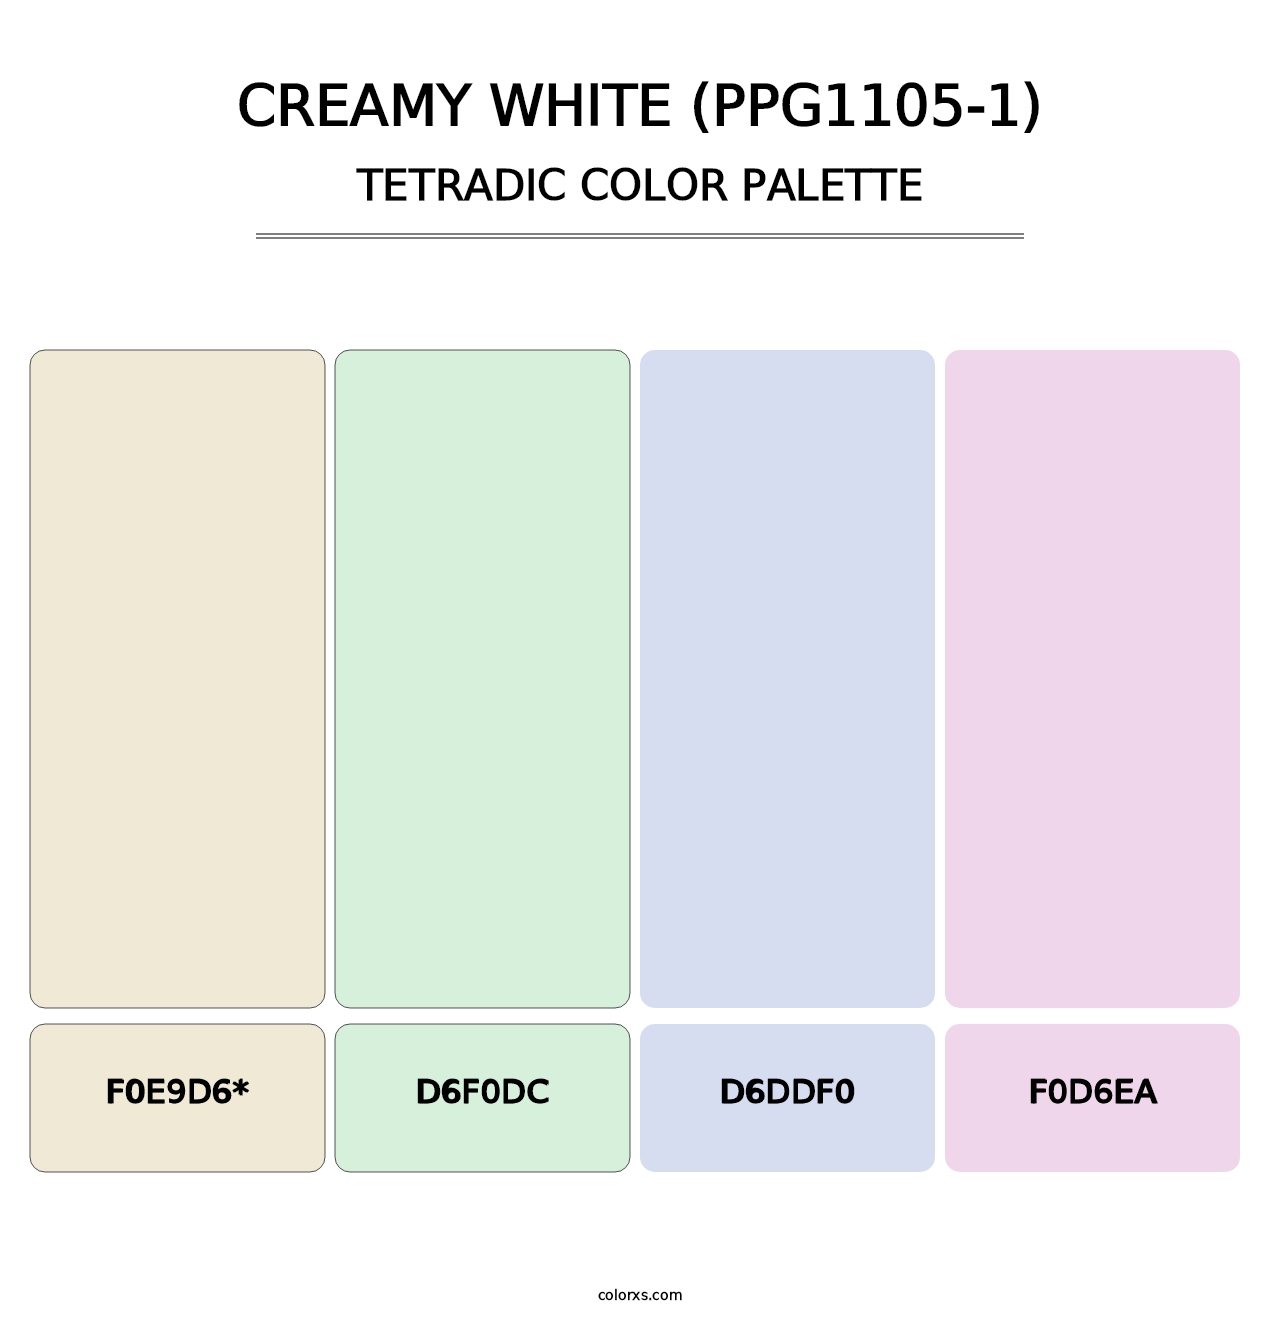 Creamy White (PPG1105-1) - Tetradic Color Palette